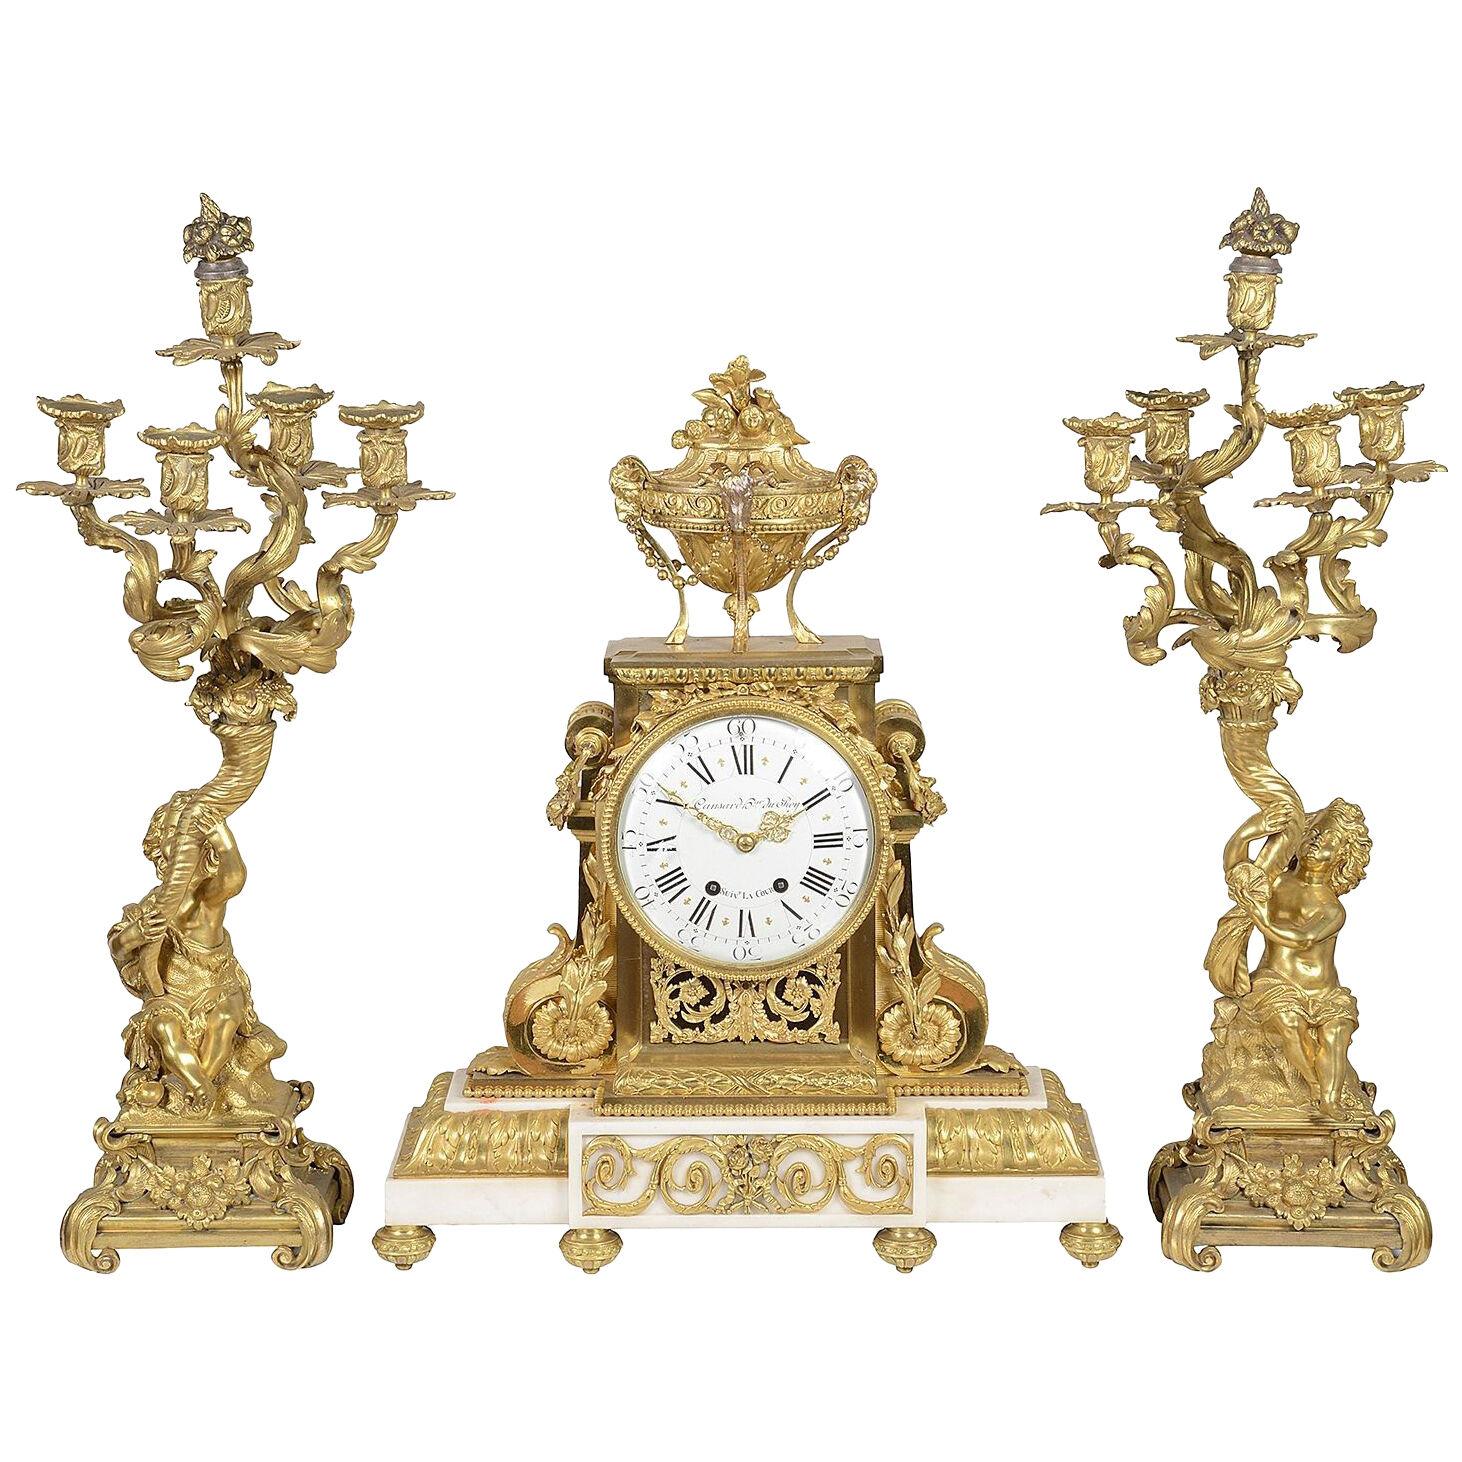 French Louis XVI style mantel clock + candelabra, 19th Century.